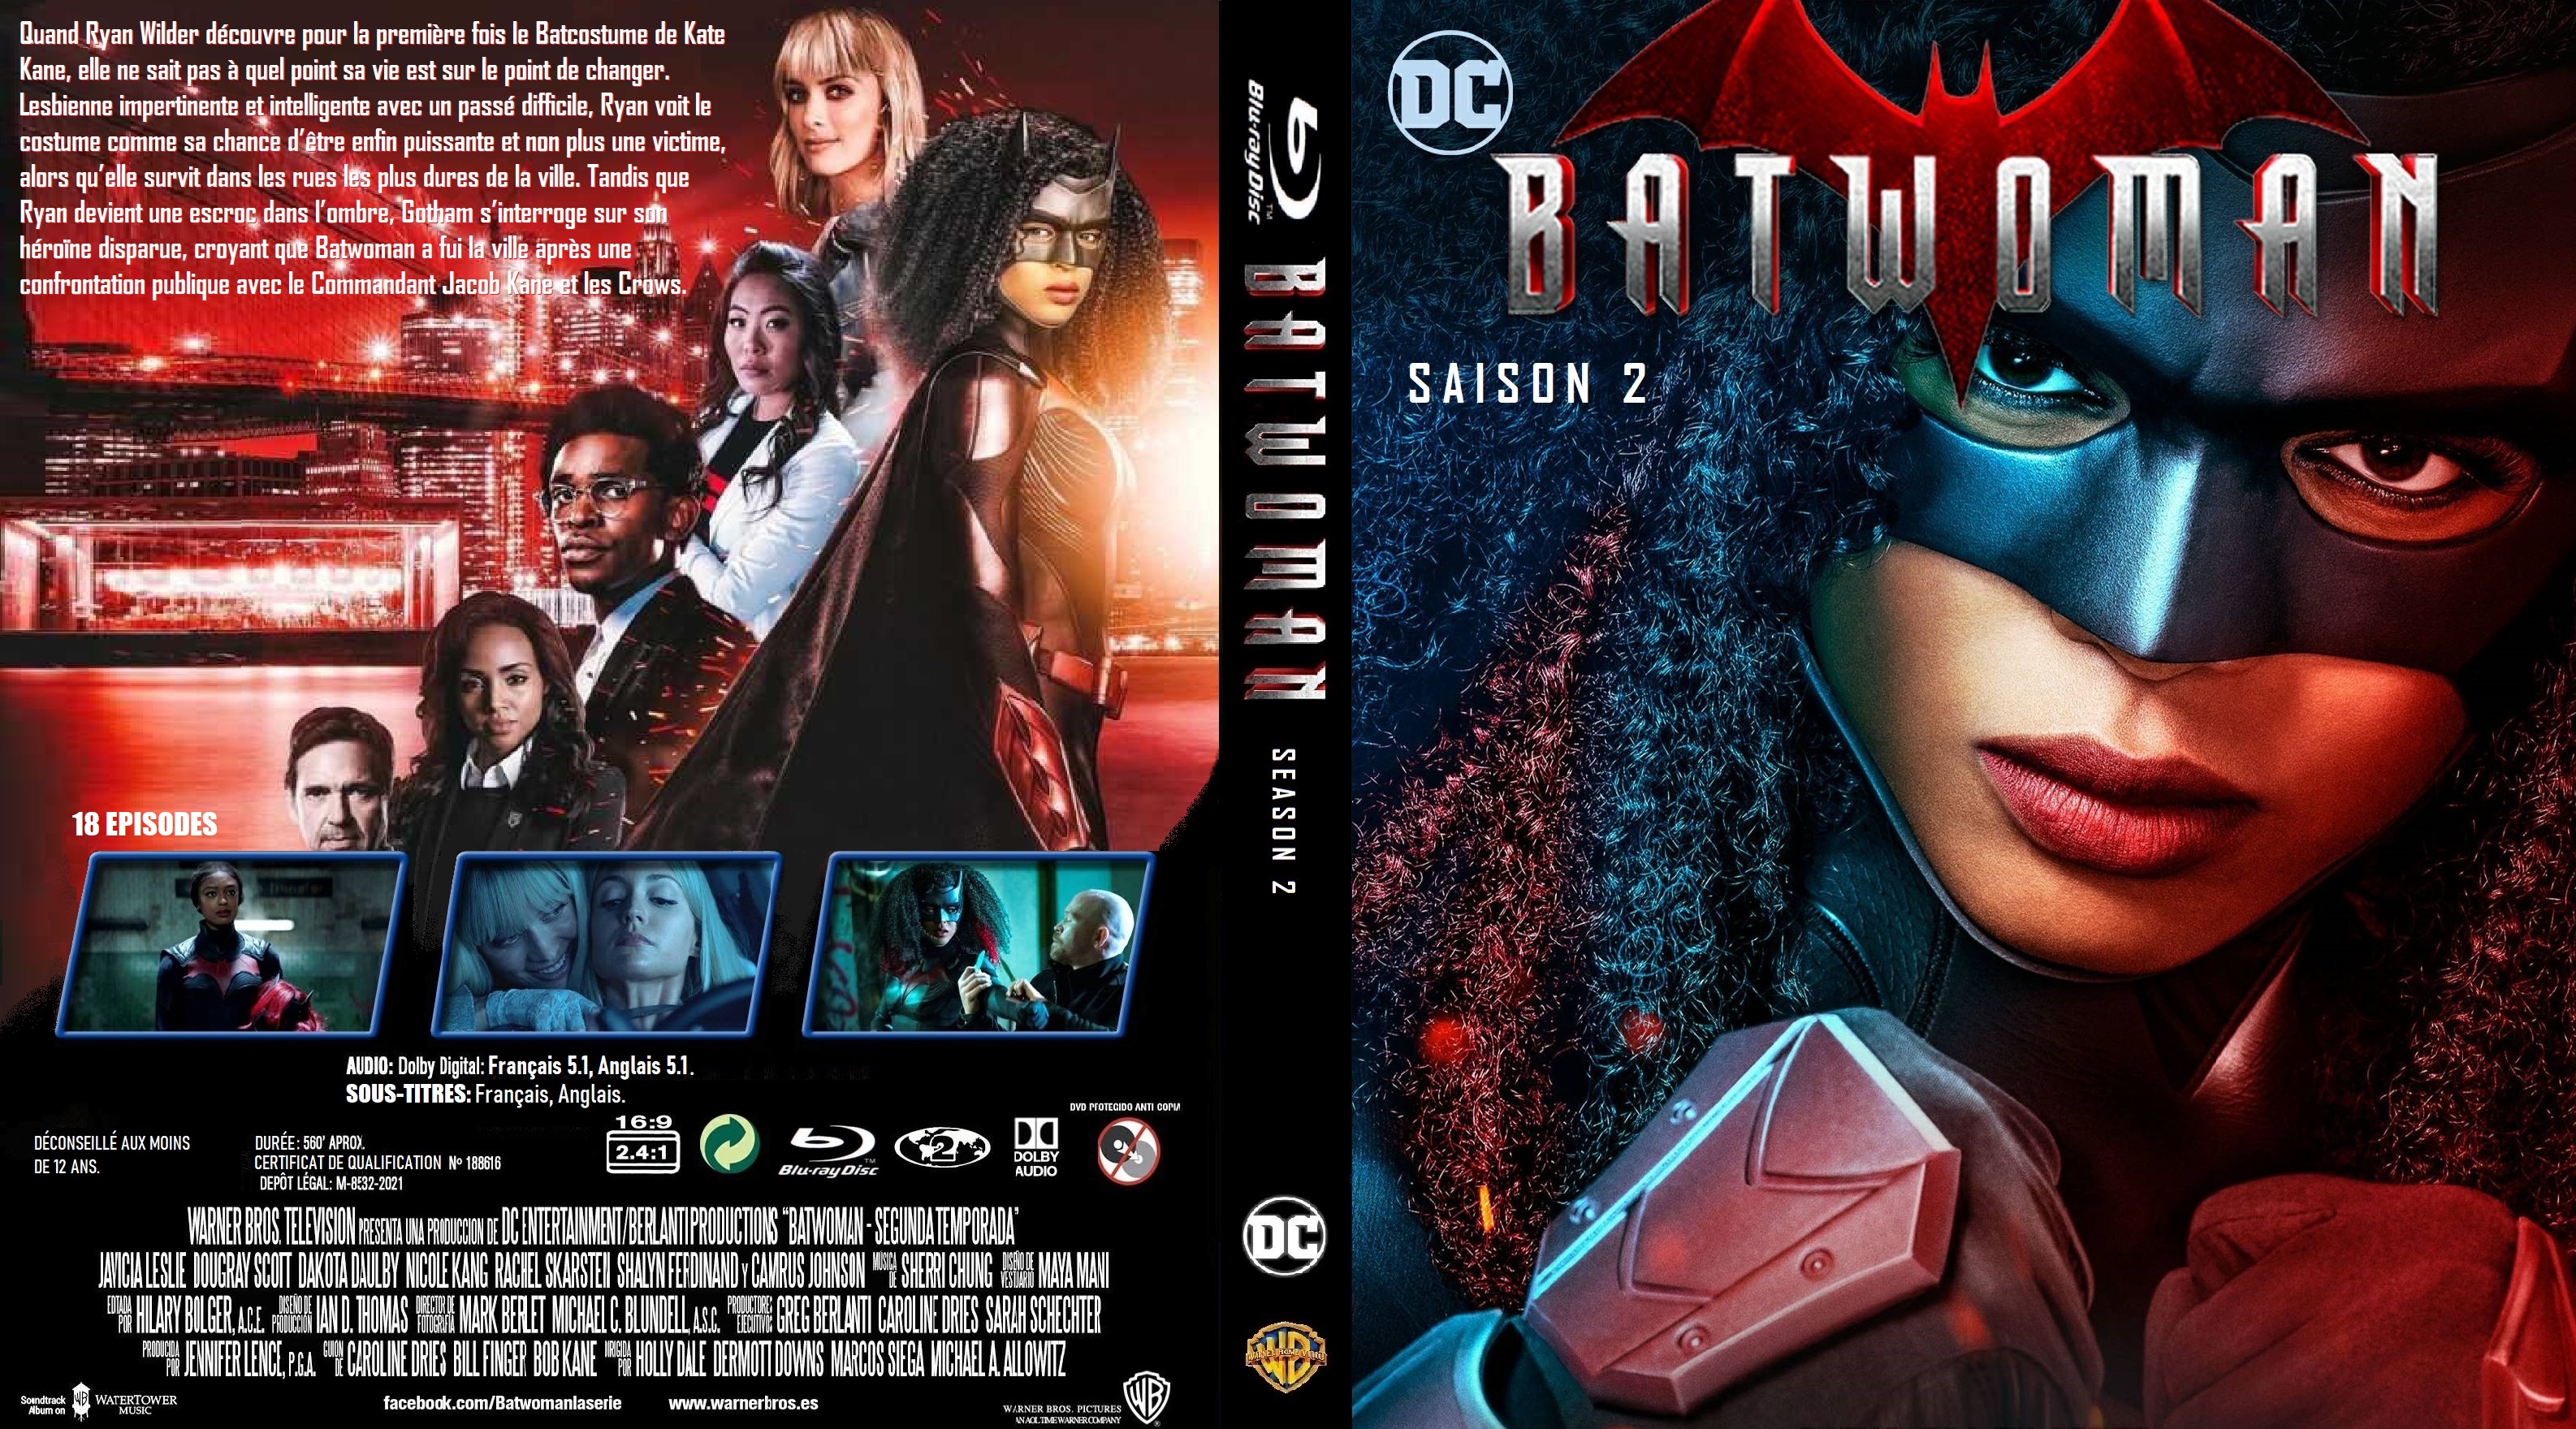 Jaquette DVD Batwoman Saison 2 custom (BLU-RAY)